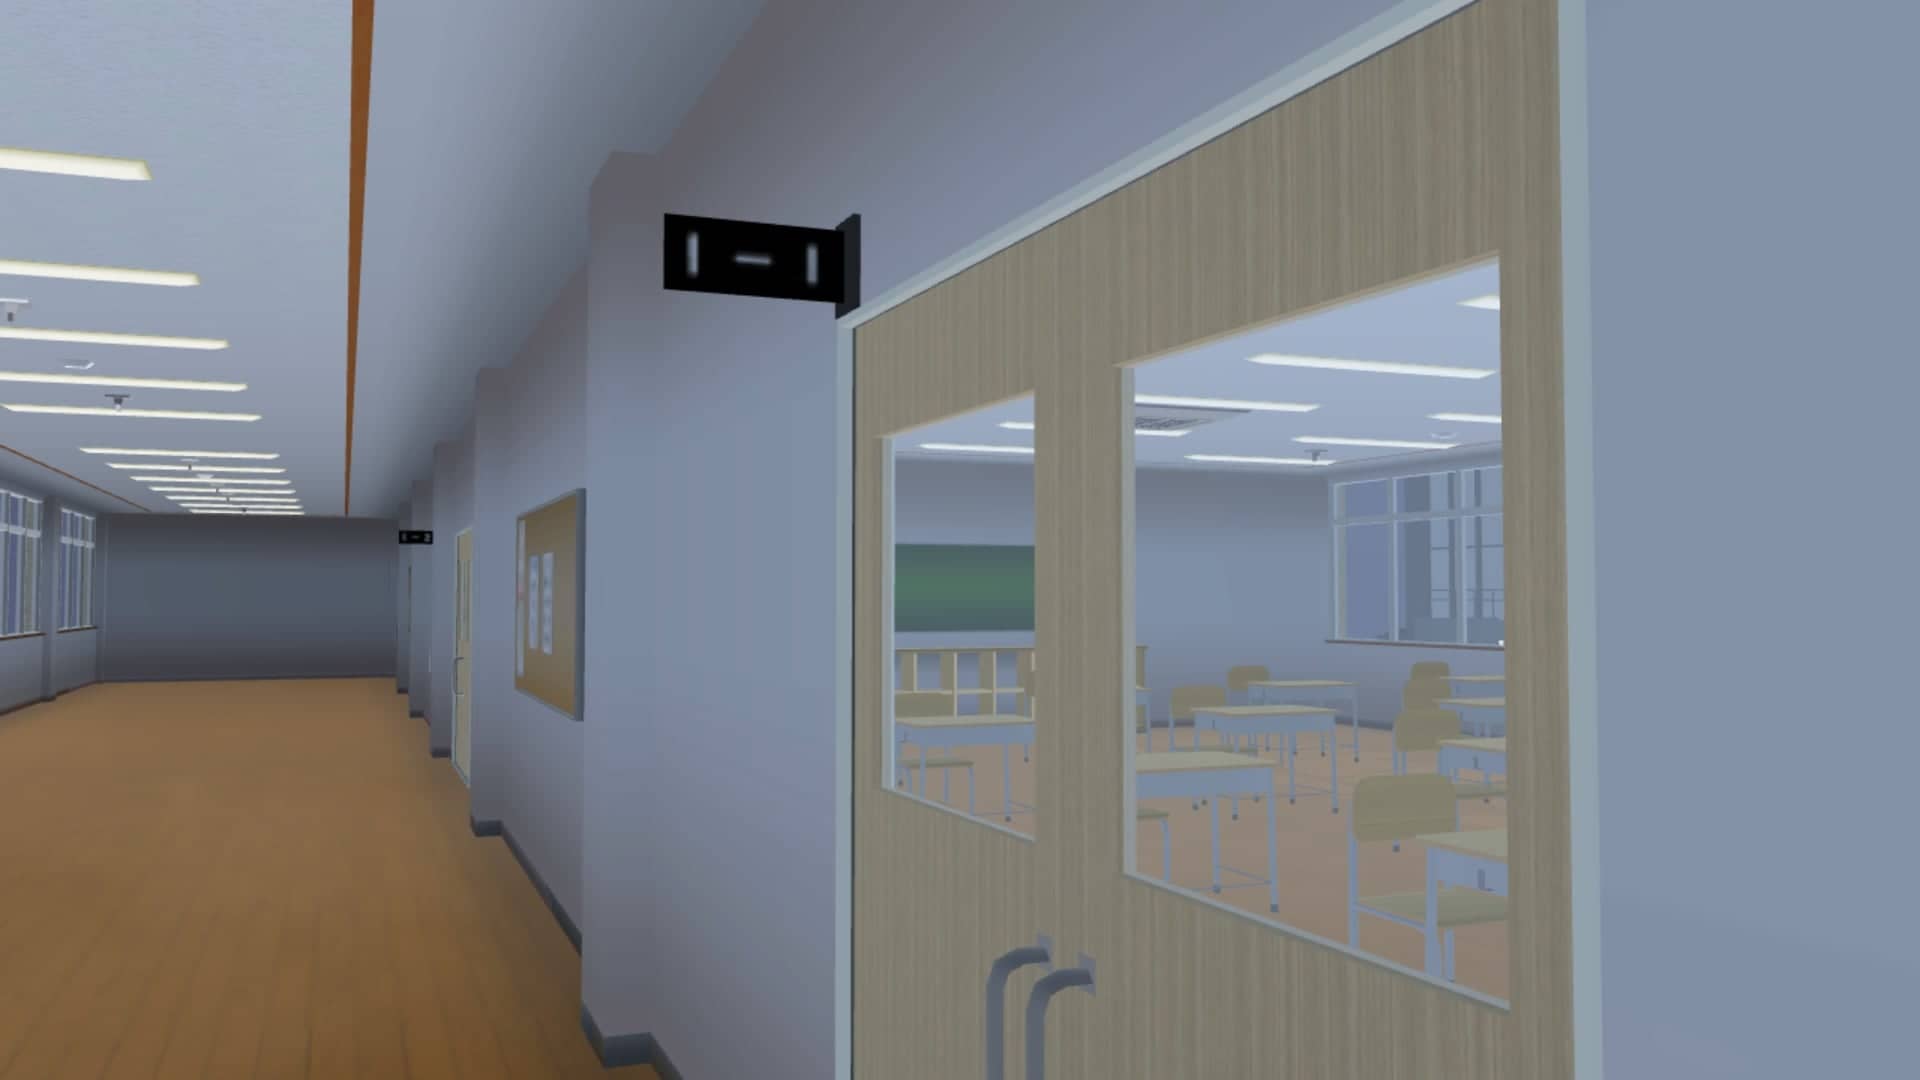 Classroom 1 1. SAKURA School Simulator